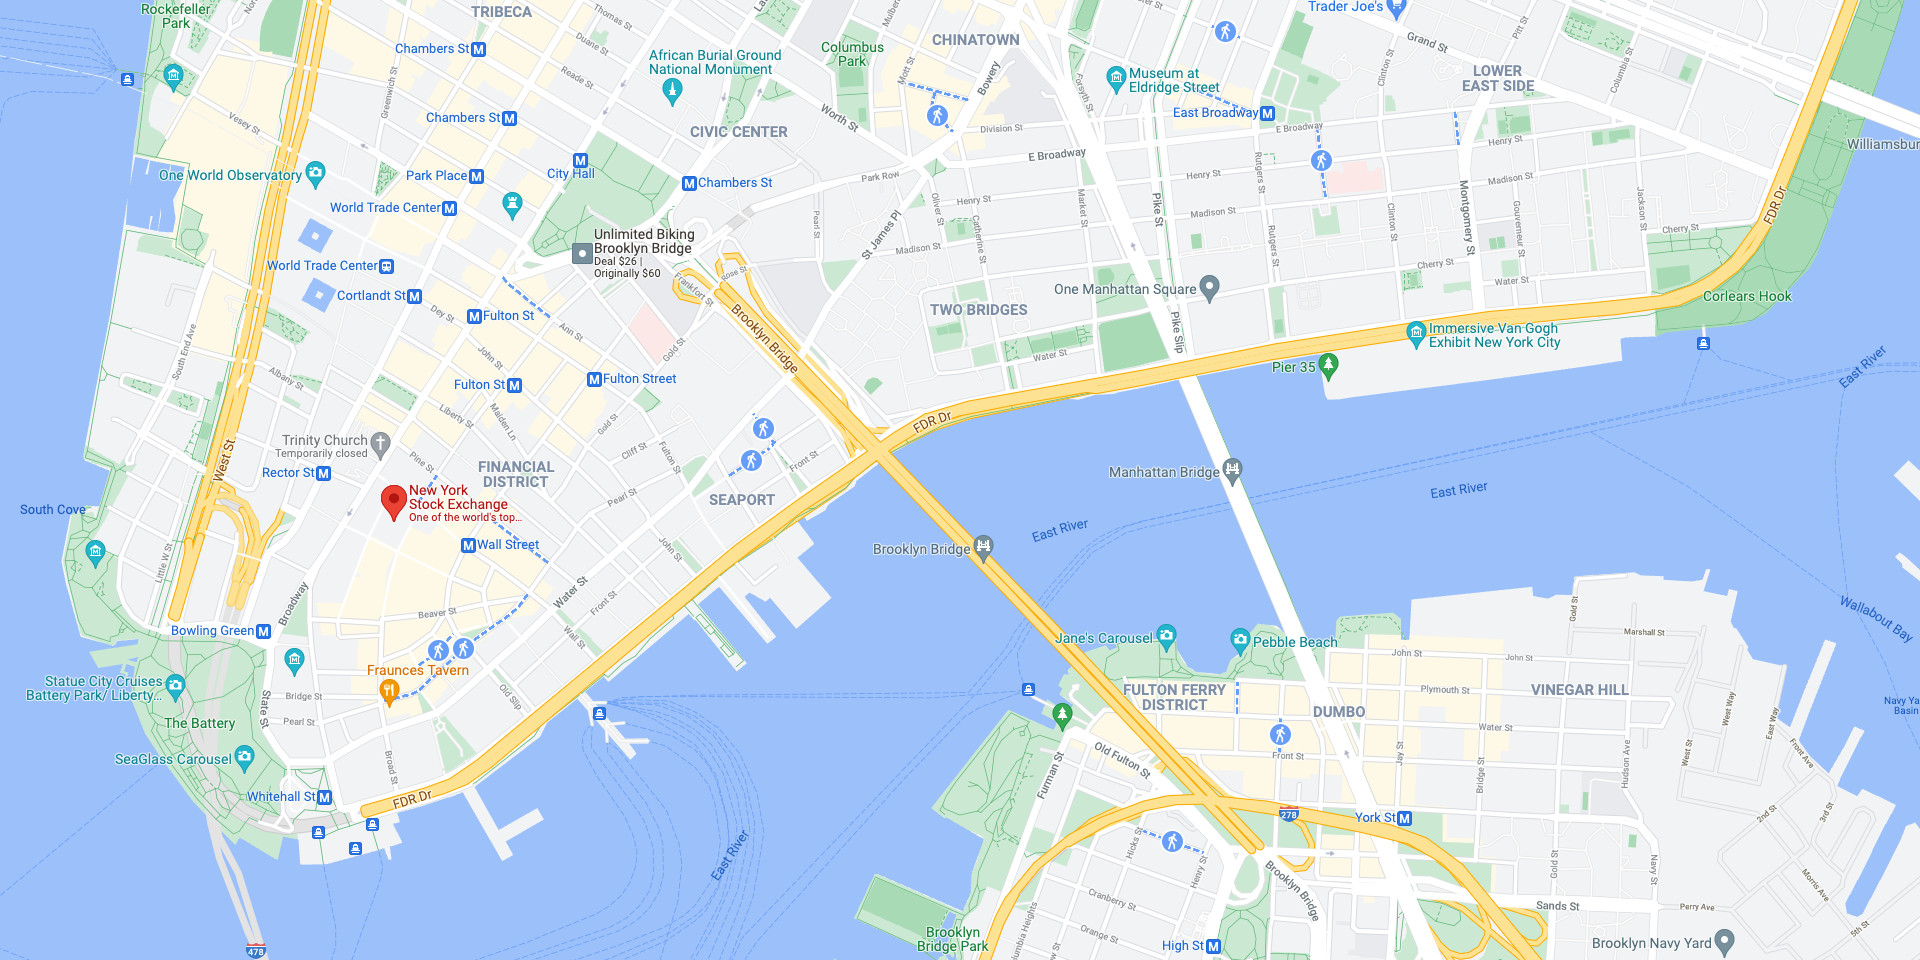 New York Stock Exchange on Google Map